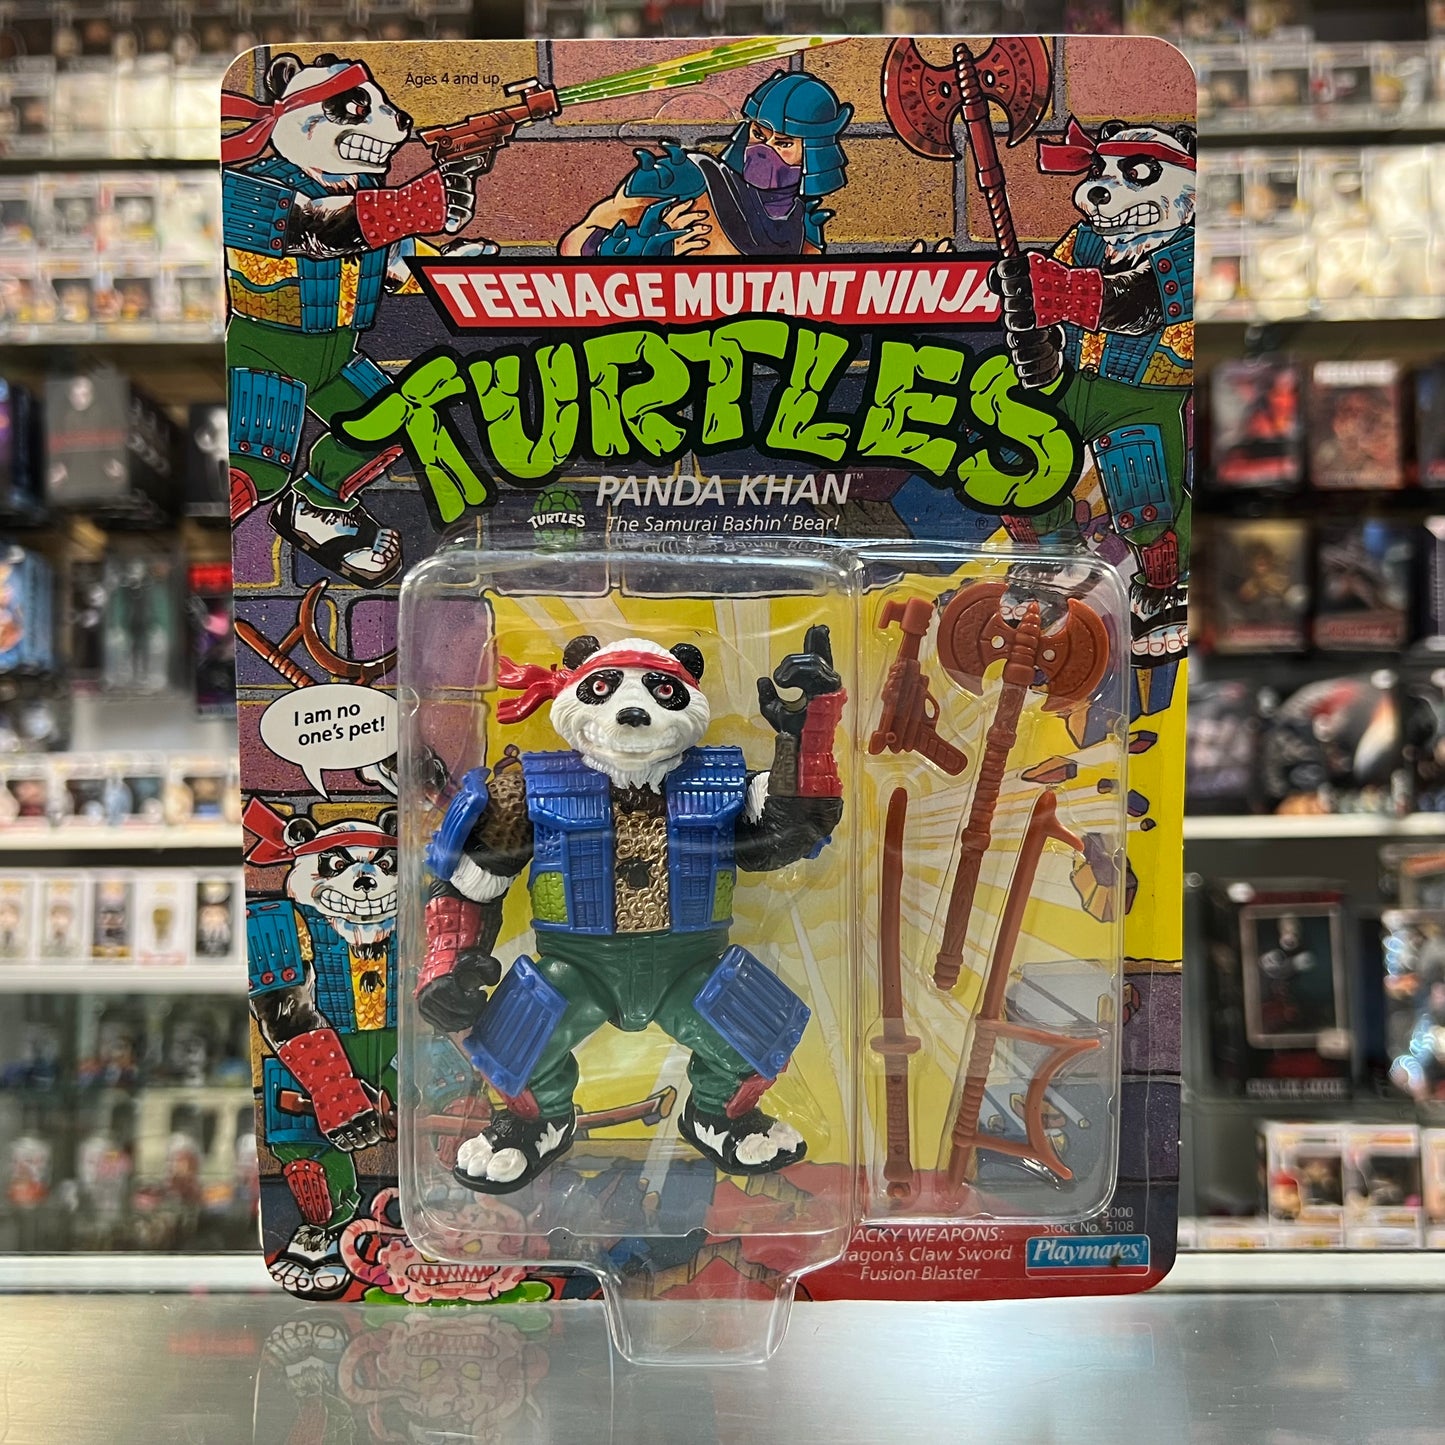 Teenage Mutant Ninja Turtles - Panda Khan - Action Figure - In box - (1990)